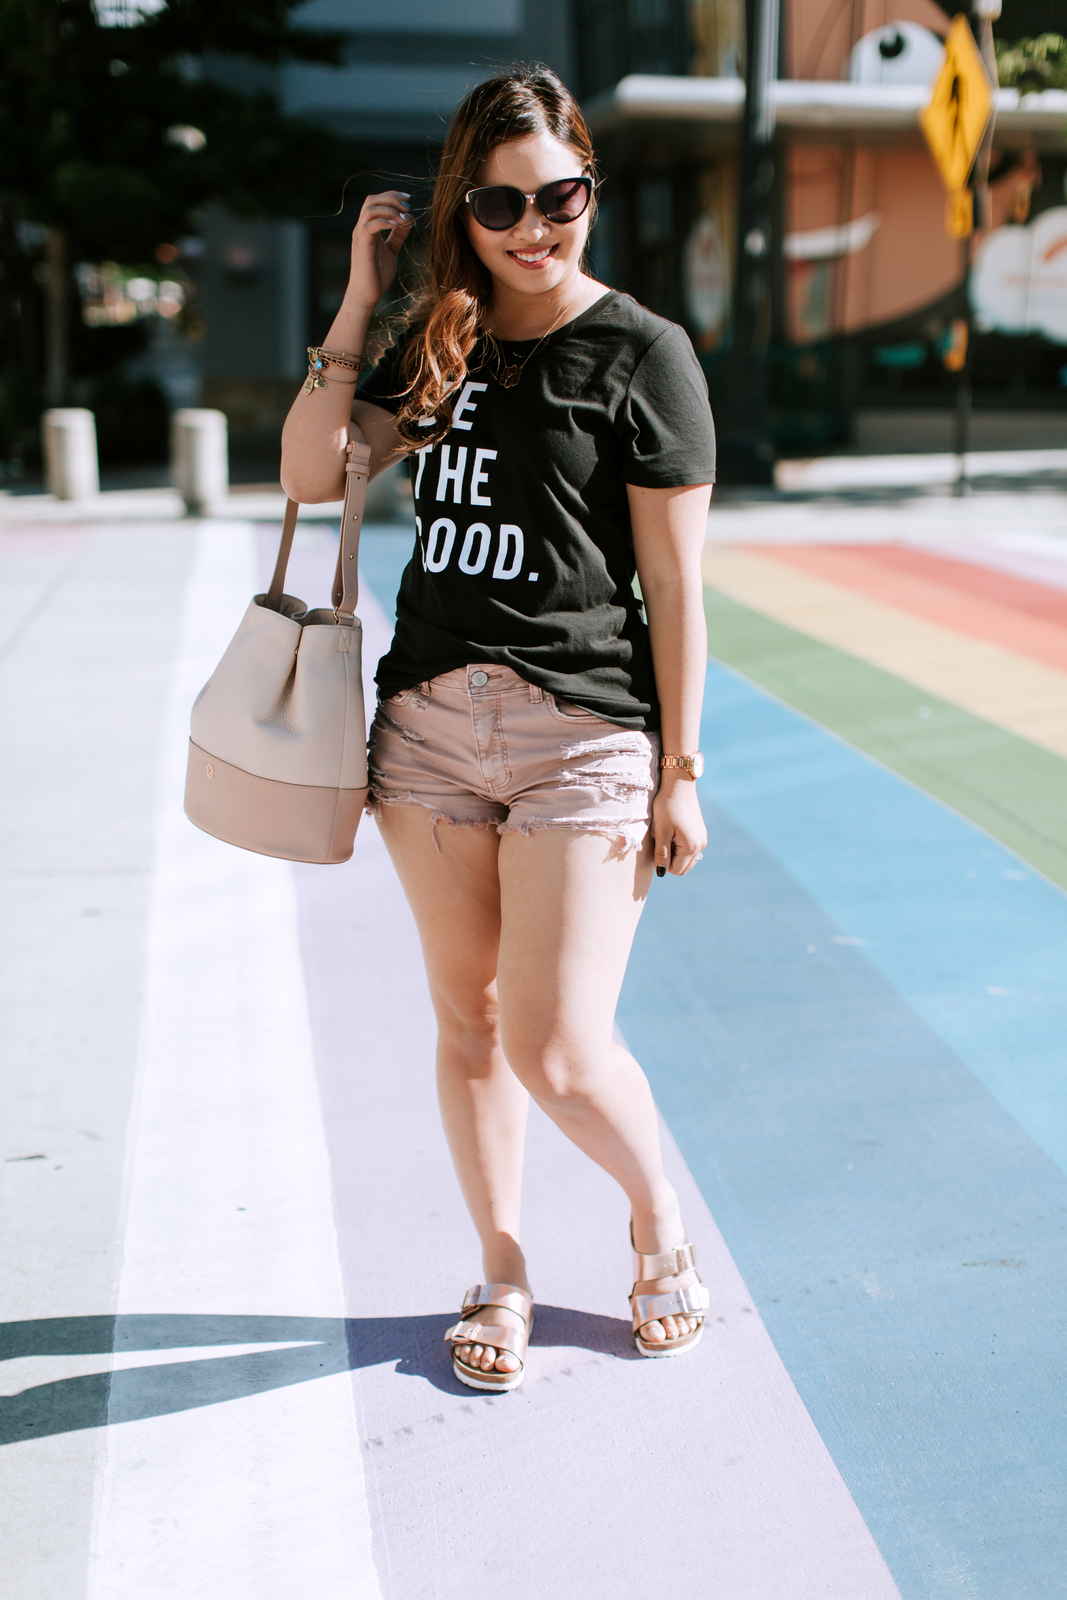 Why I Choose To Be The Good by Utah fashion blogger SandyALaMode